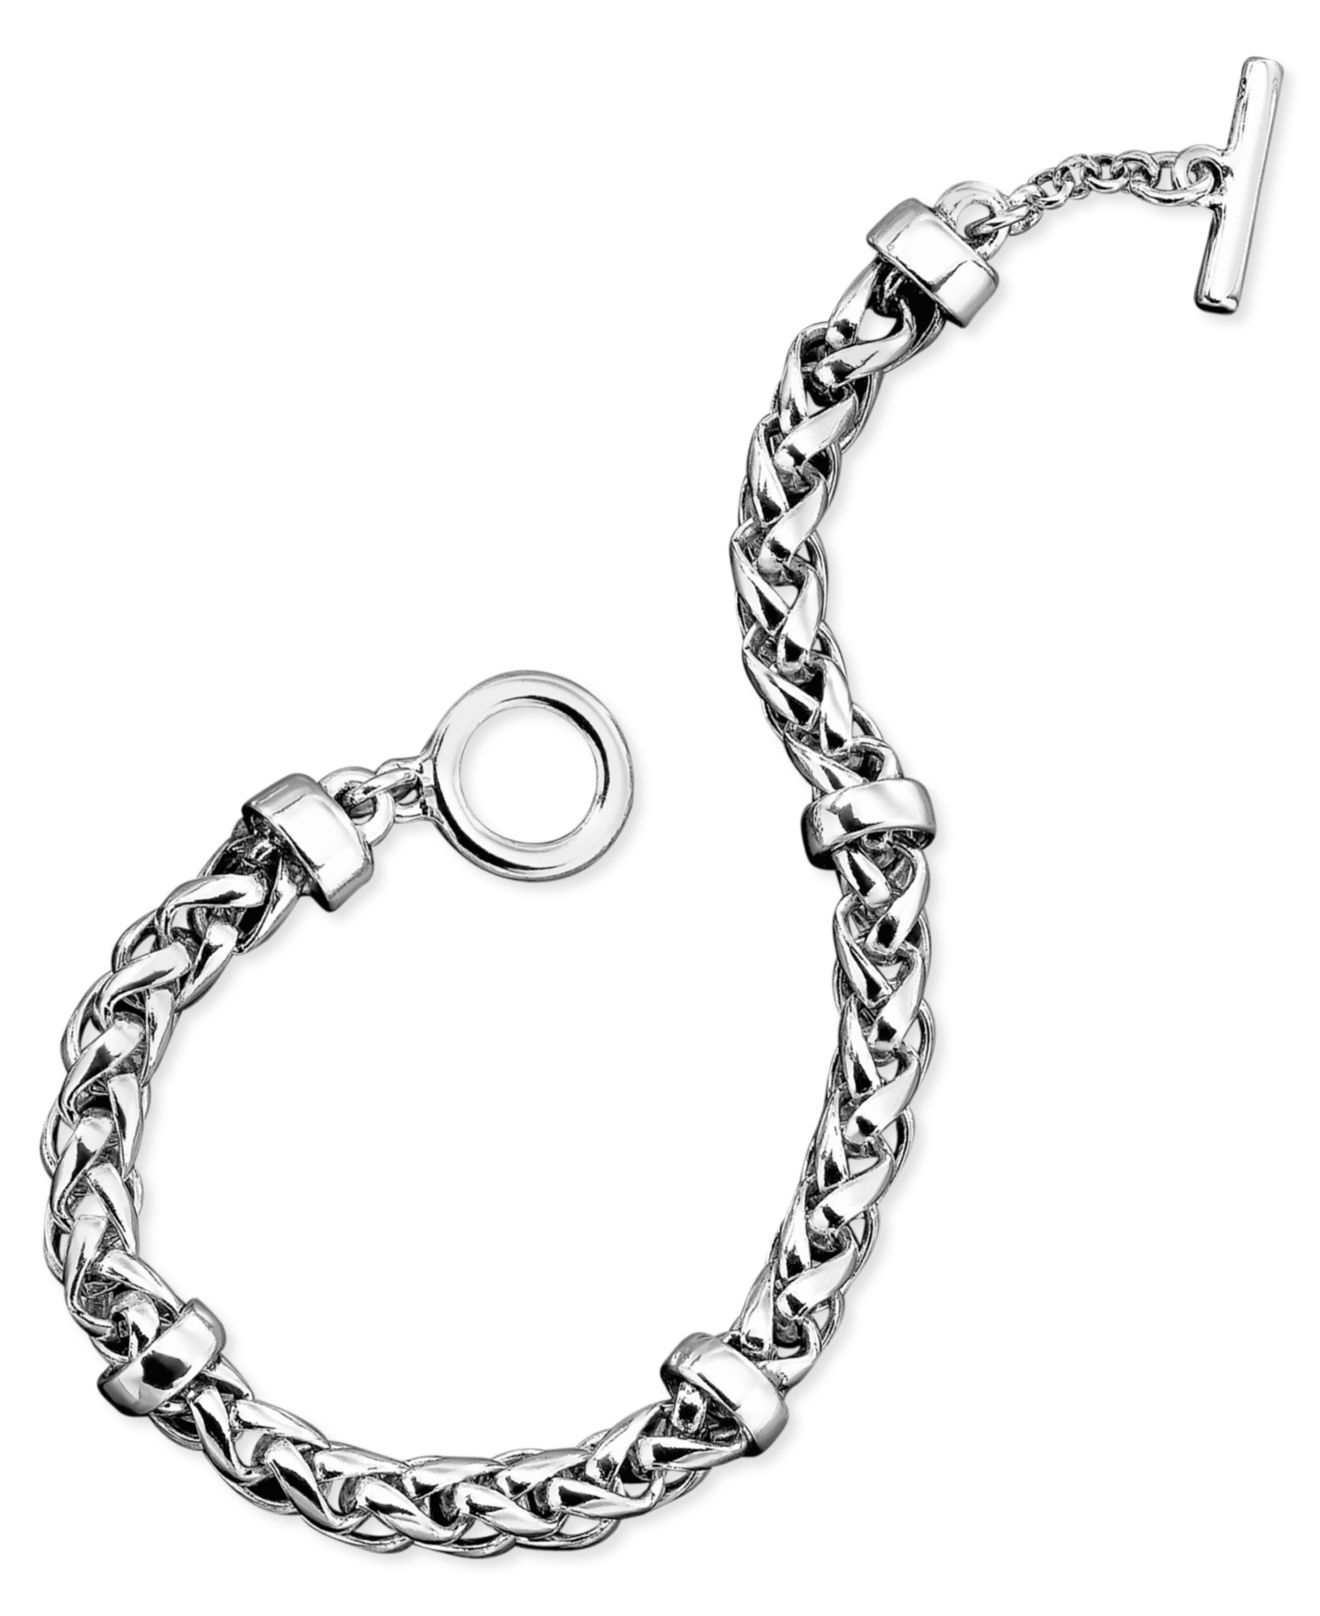 Aprender acerca 71+ imagen polo ralph lauren chain bracelet - Abzlocal.mx